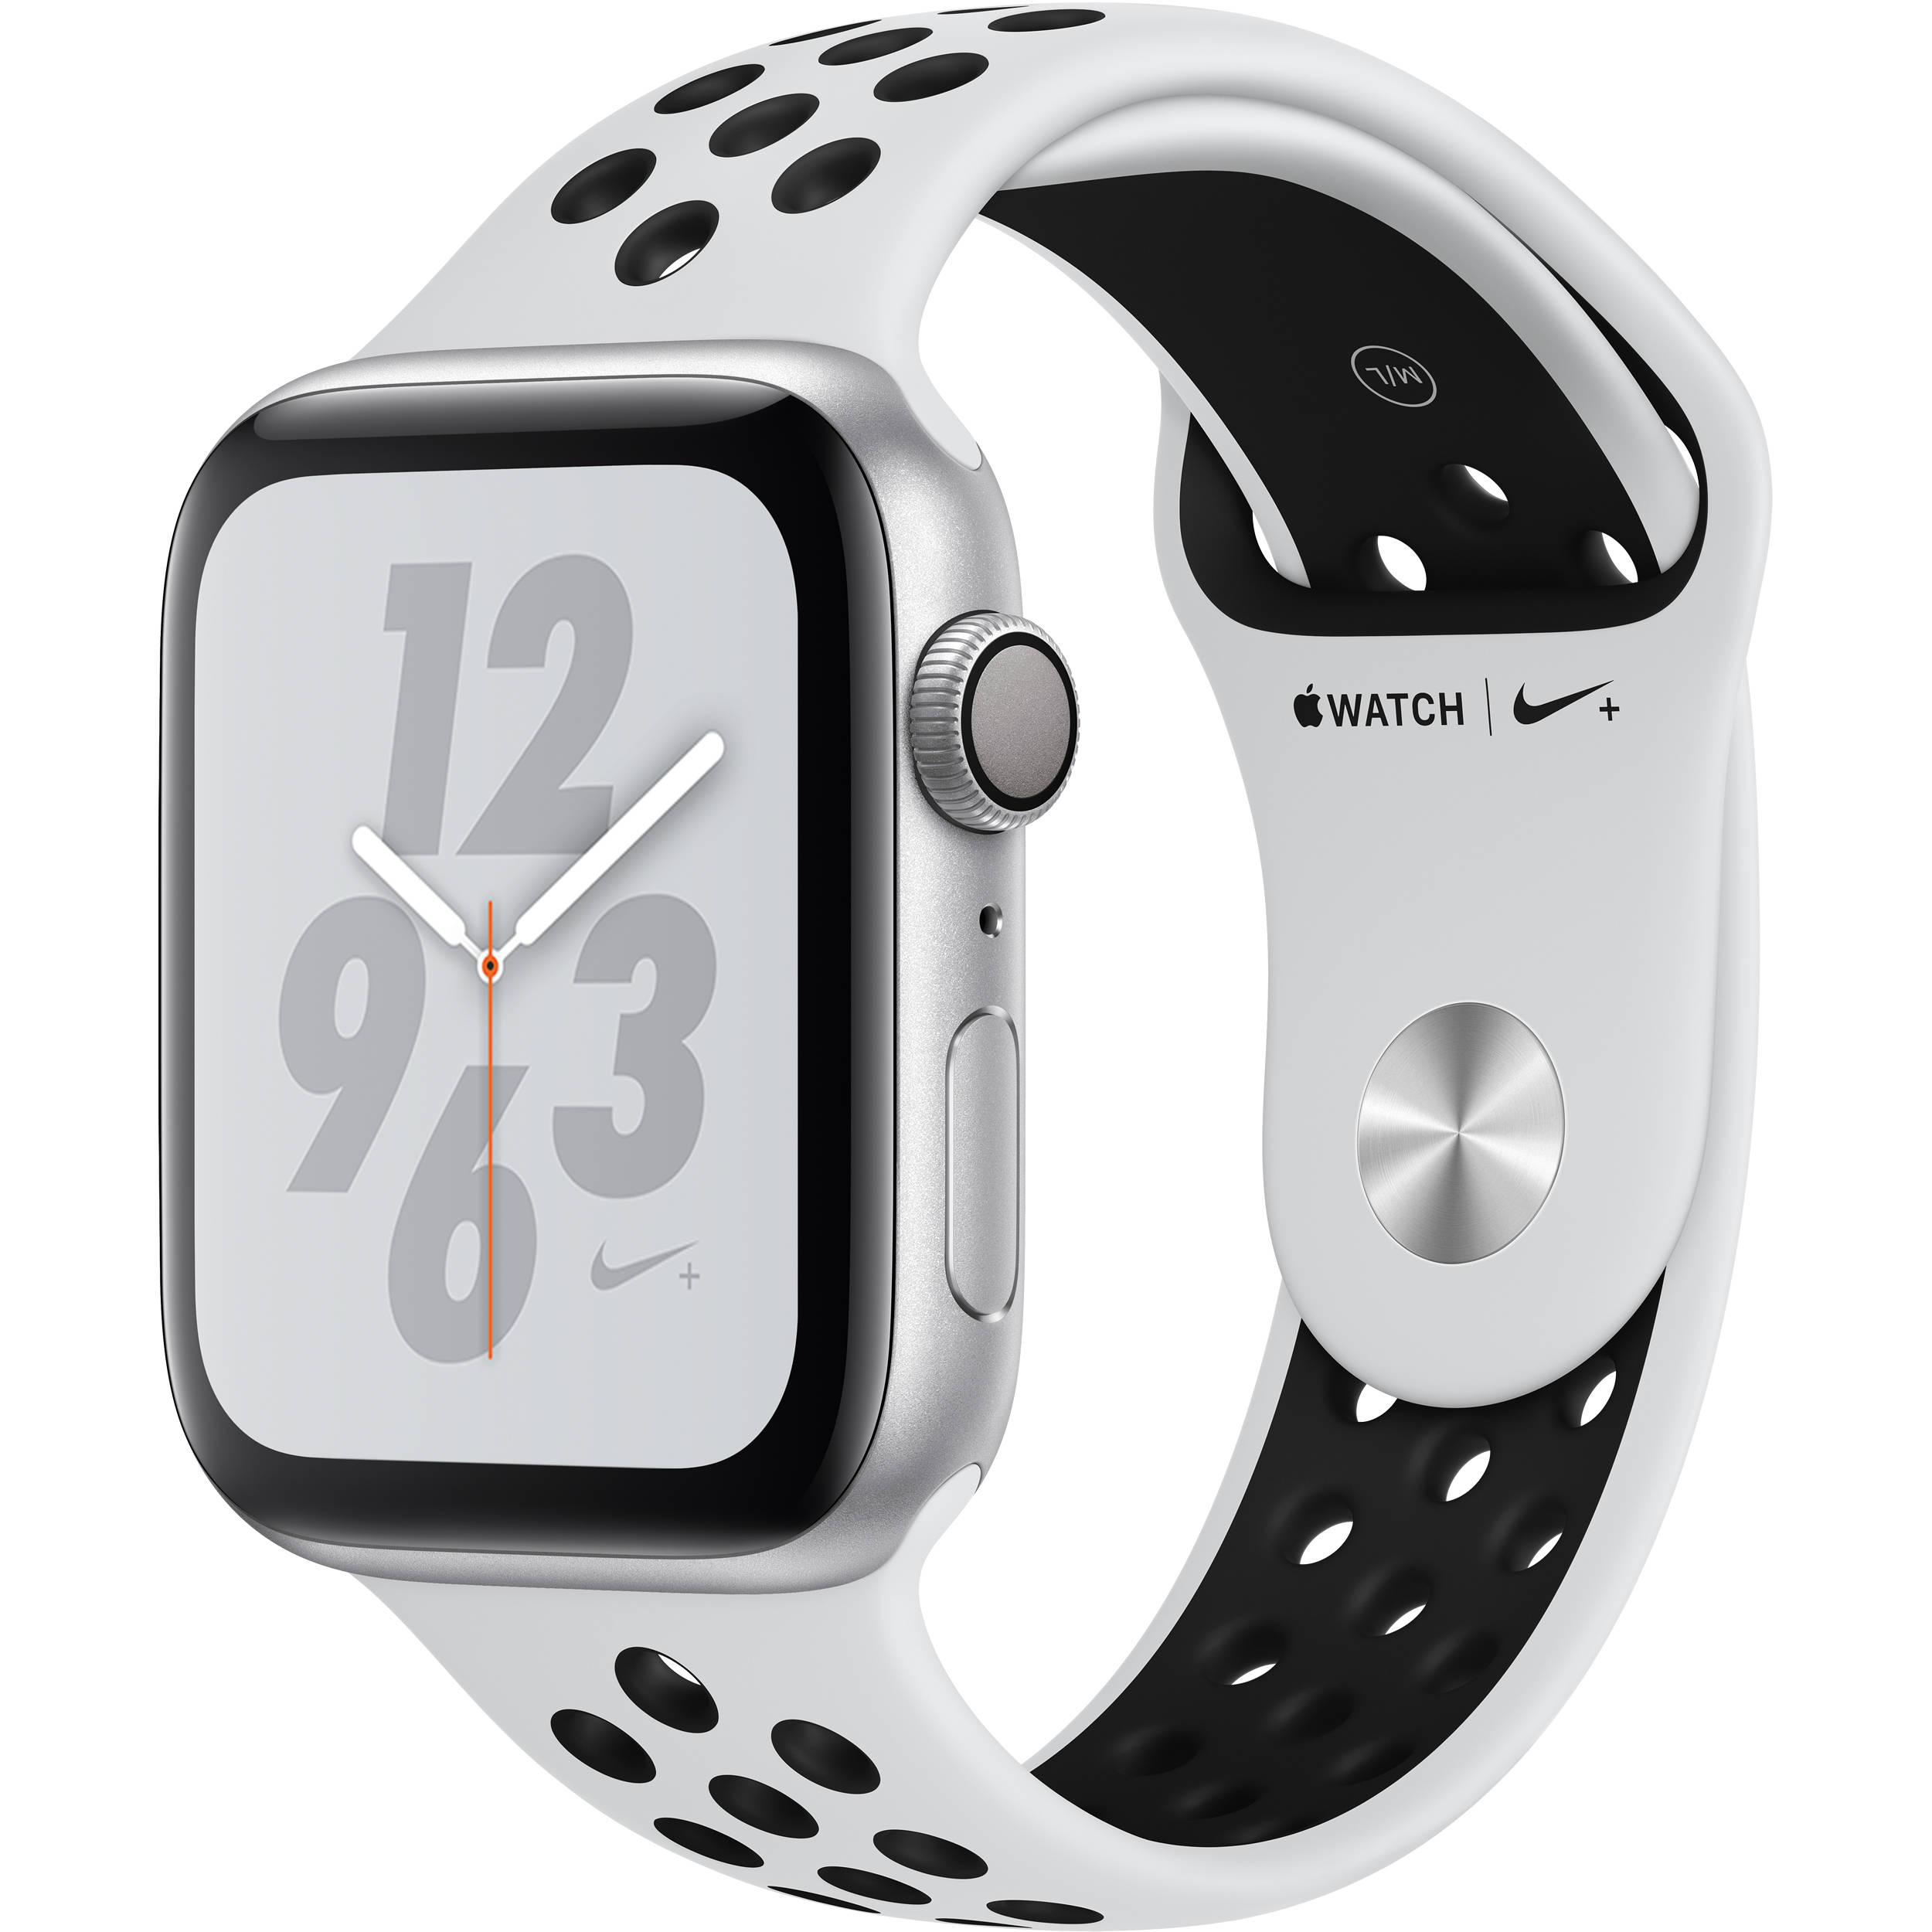 apple watch series 4 deals